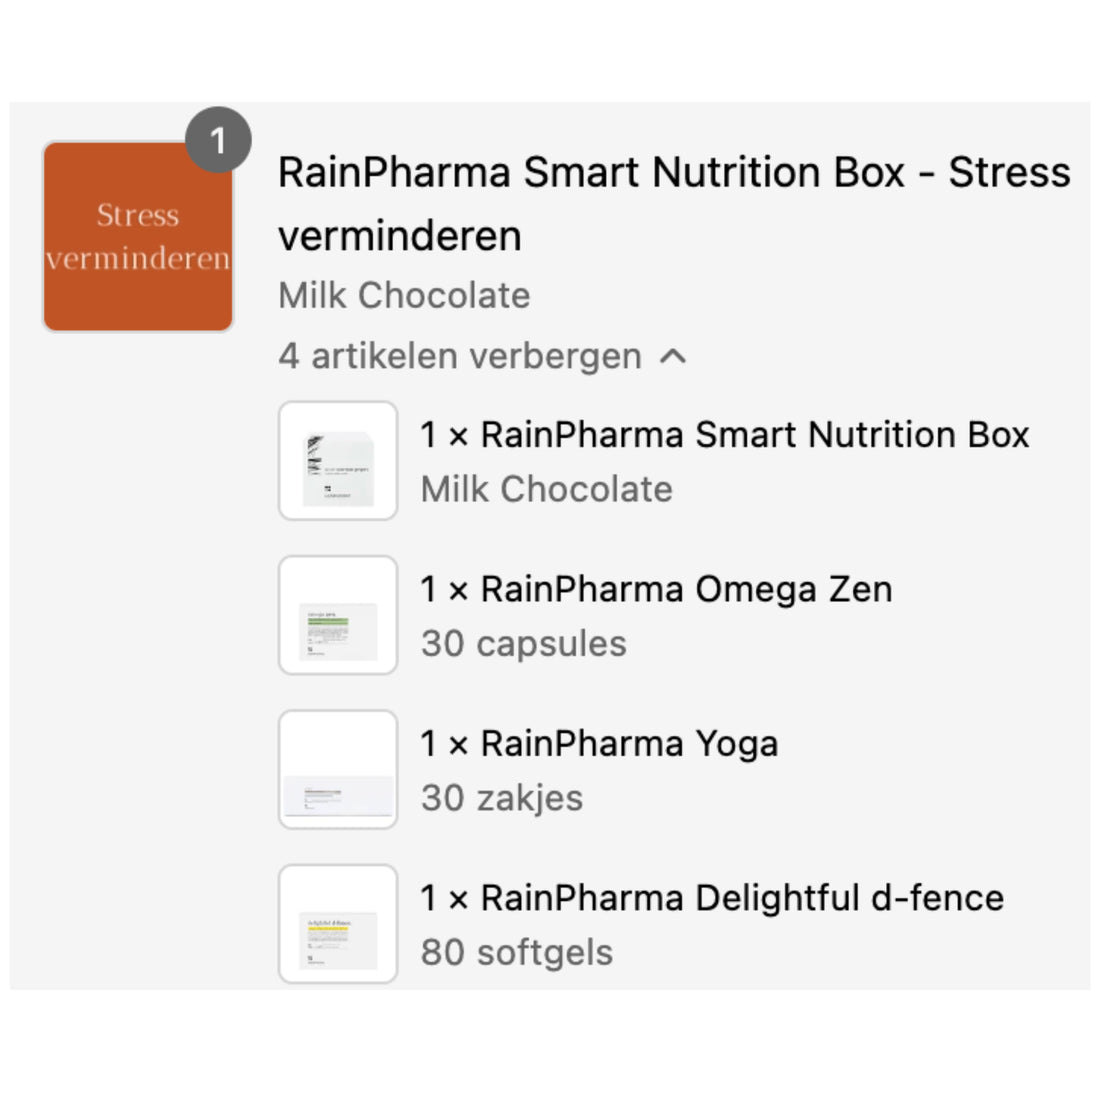 RainPharma Smart Nutrition Box - Stress verminderen